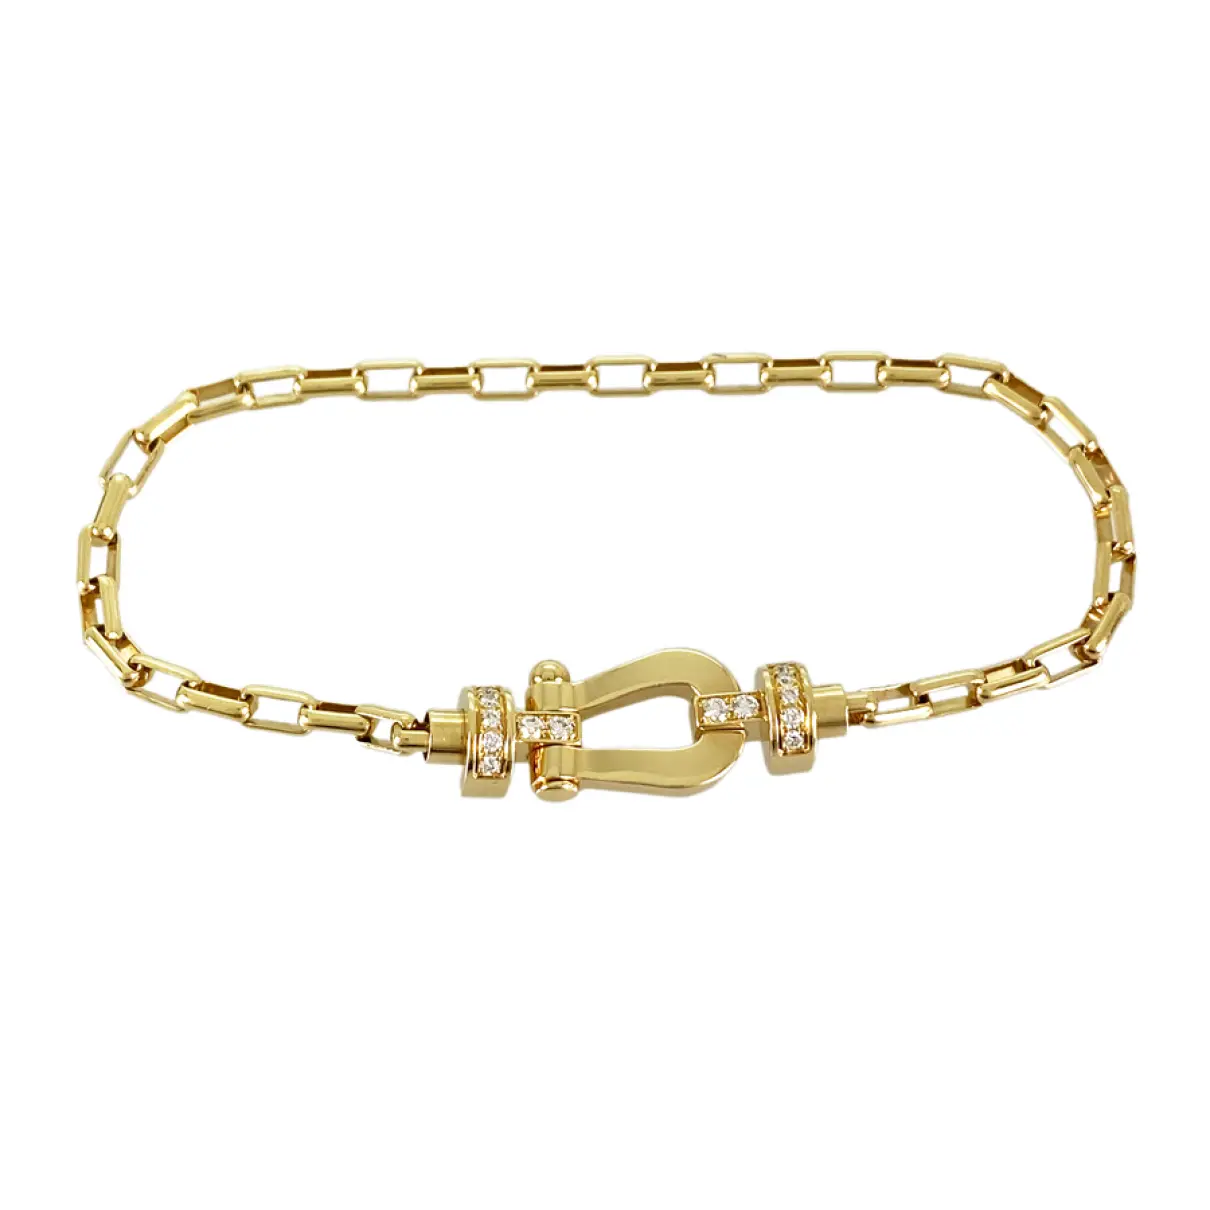 Buy Fred Yellow gold bracelet online